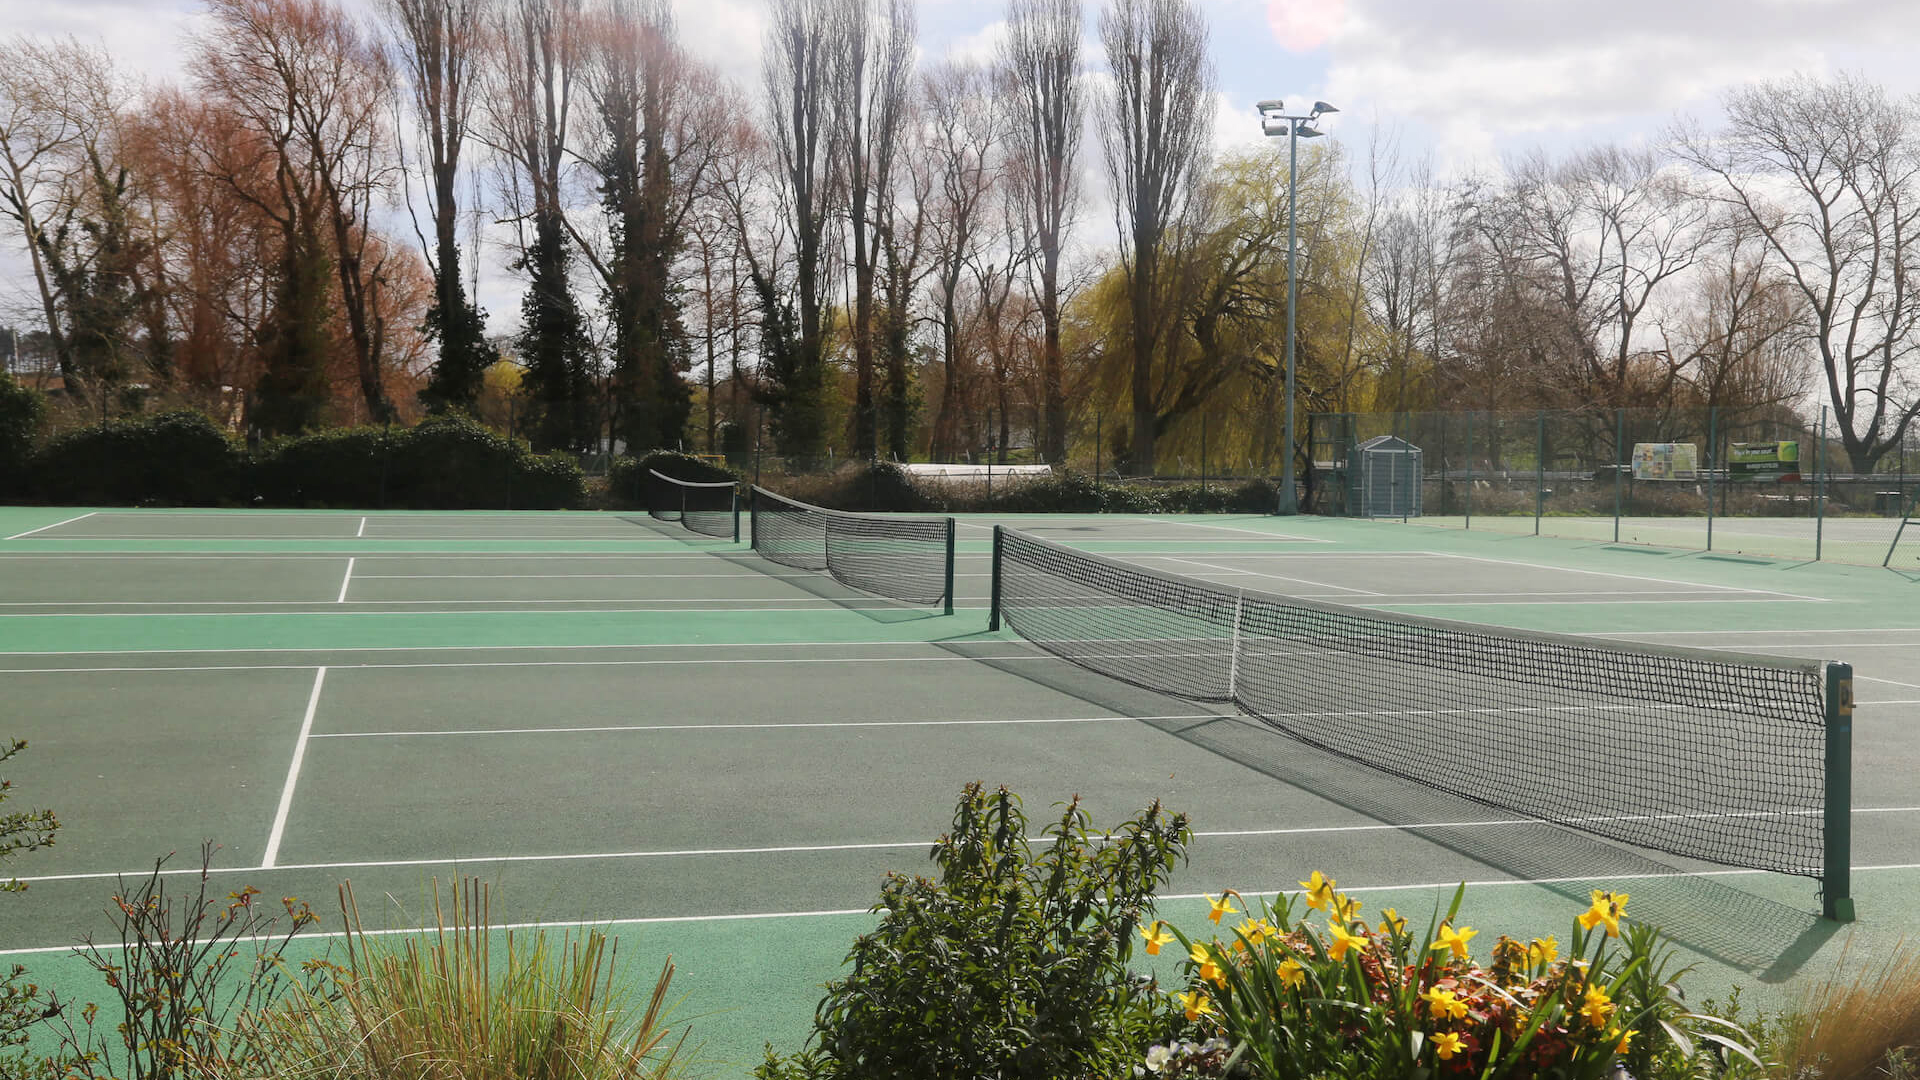 Courts at Woodbridge Tennis Club